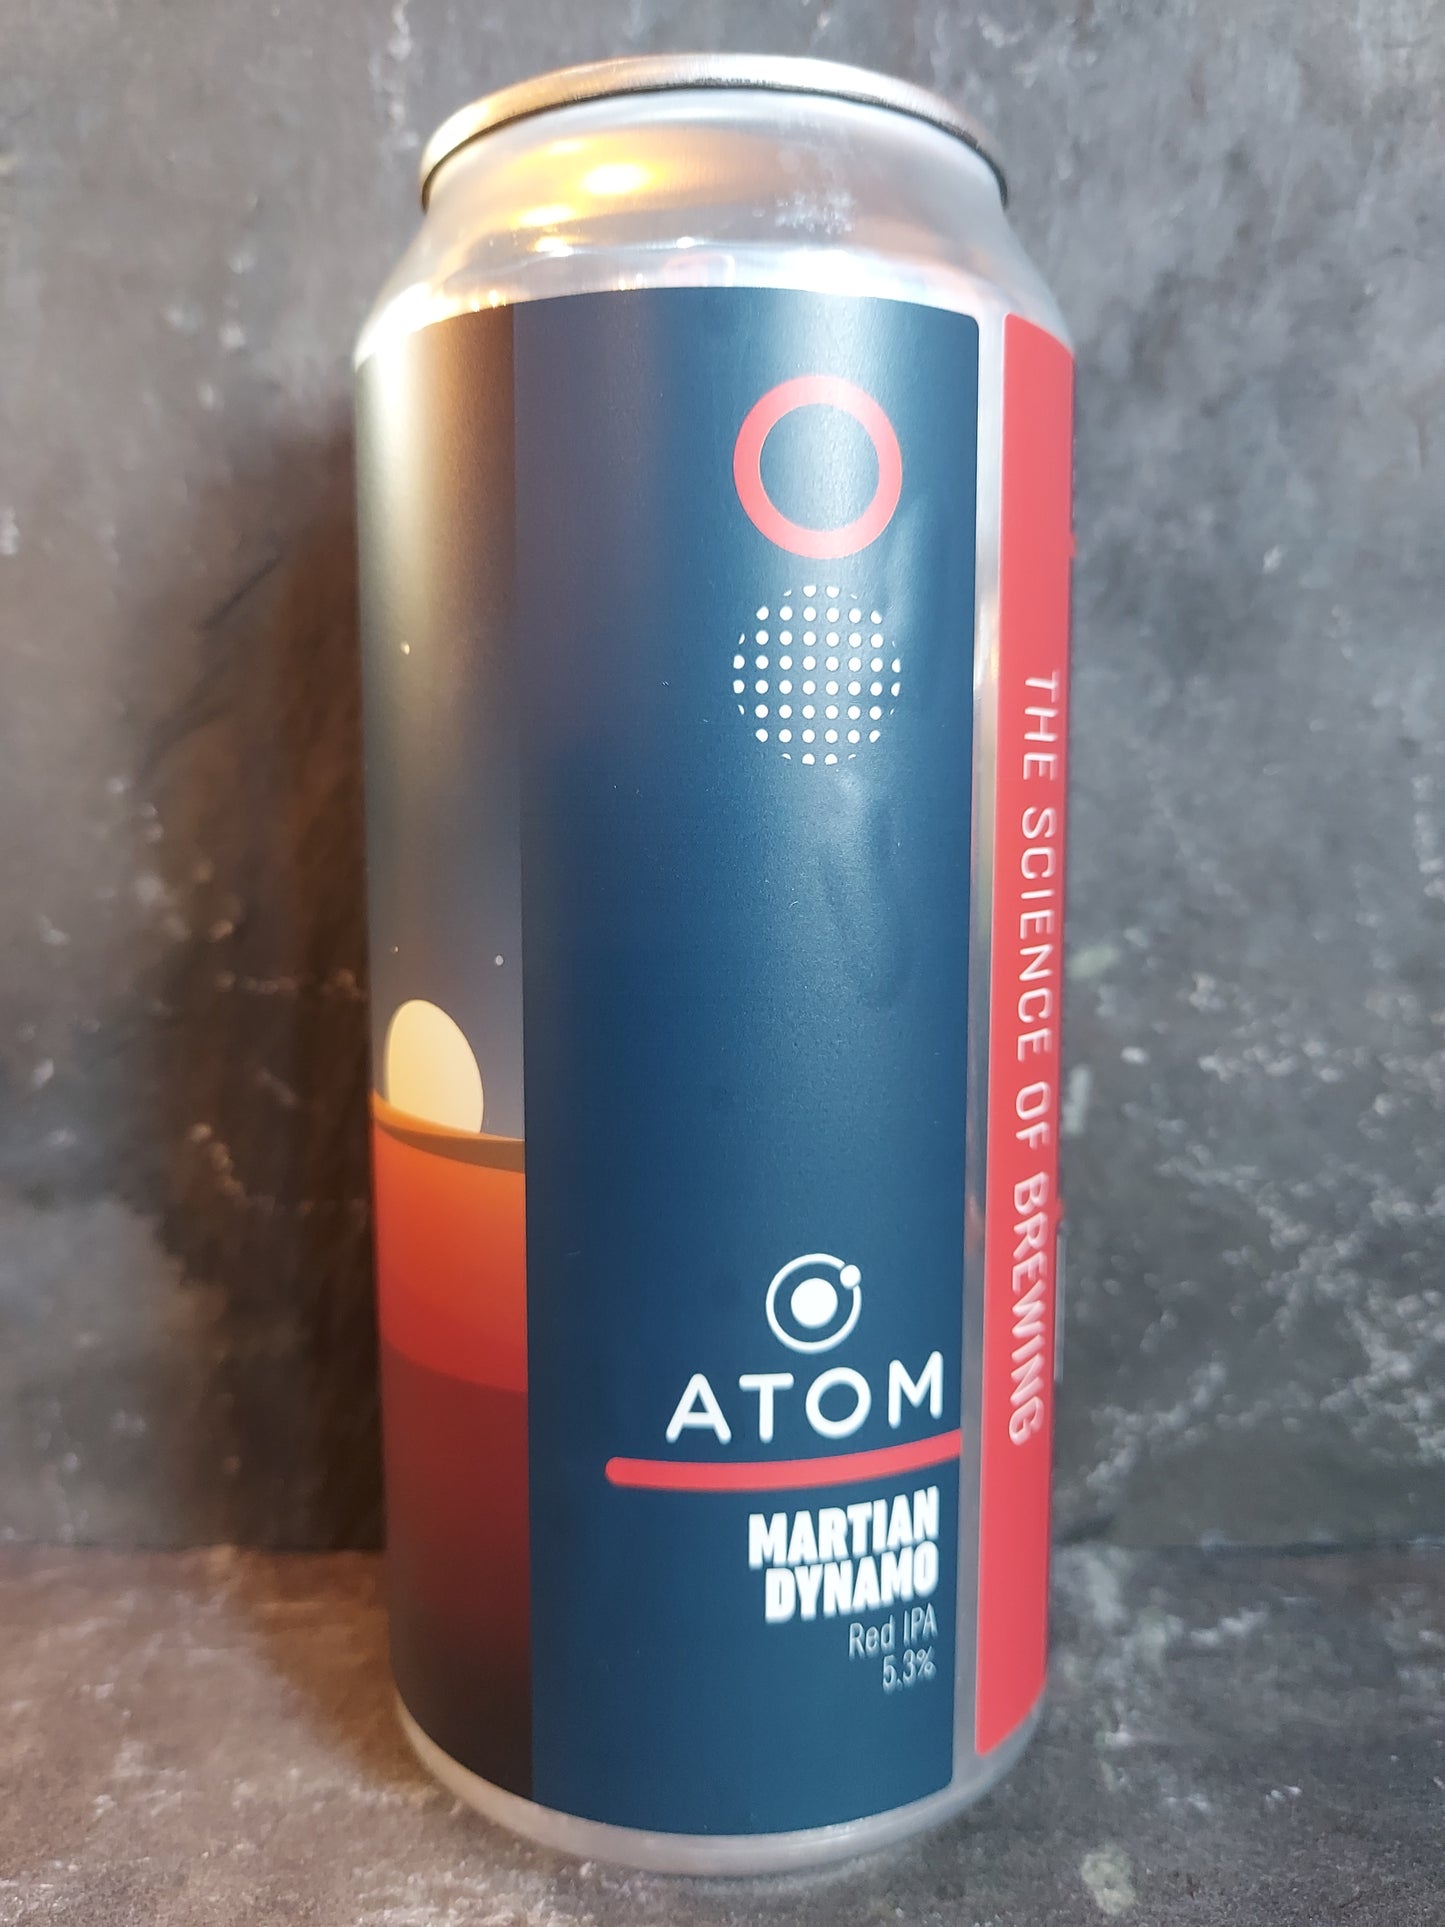 Martian Dynamo - Atom